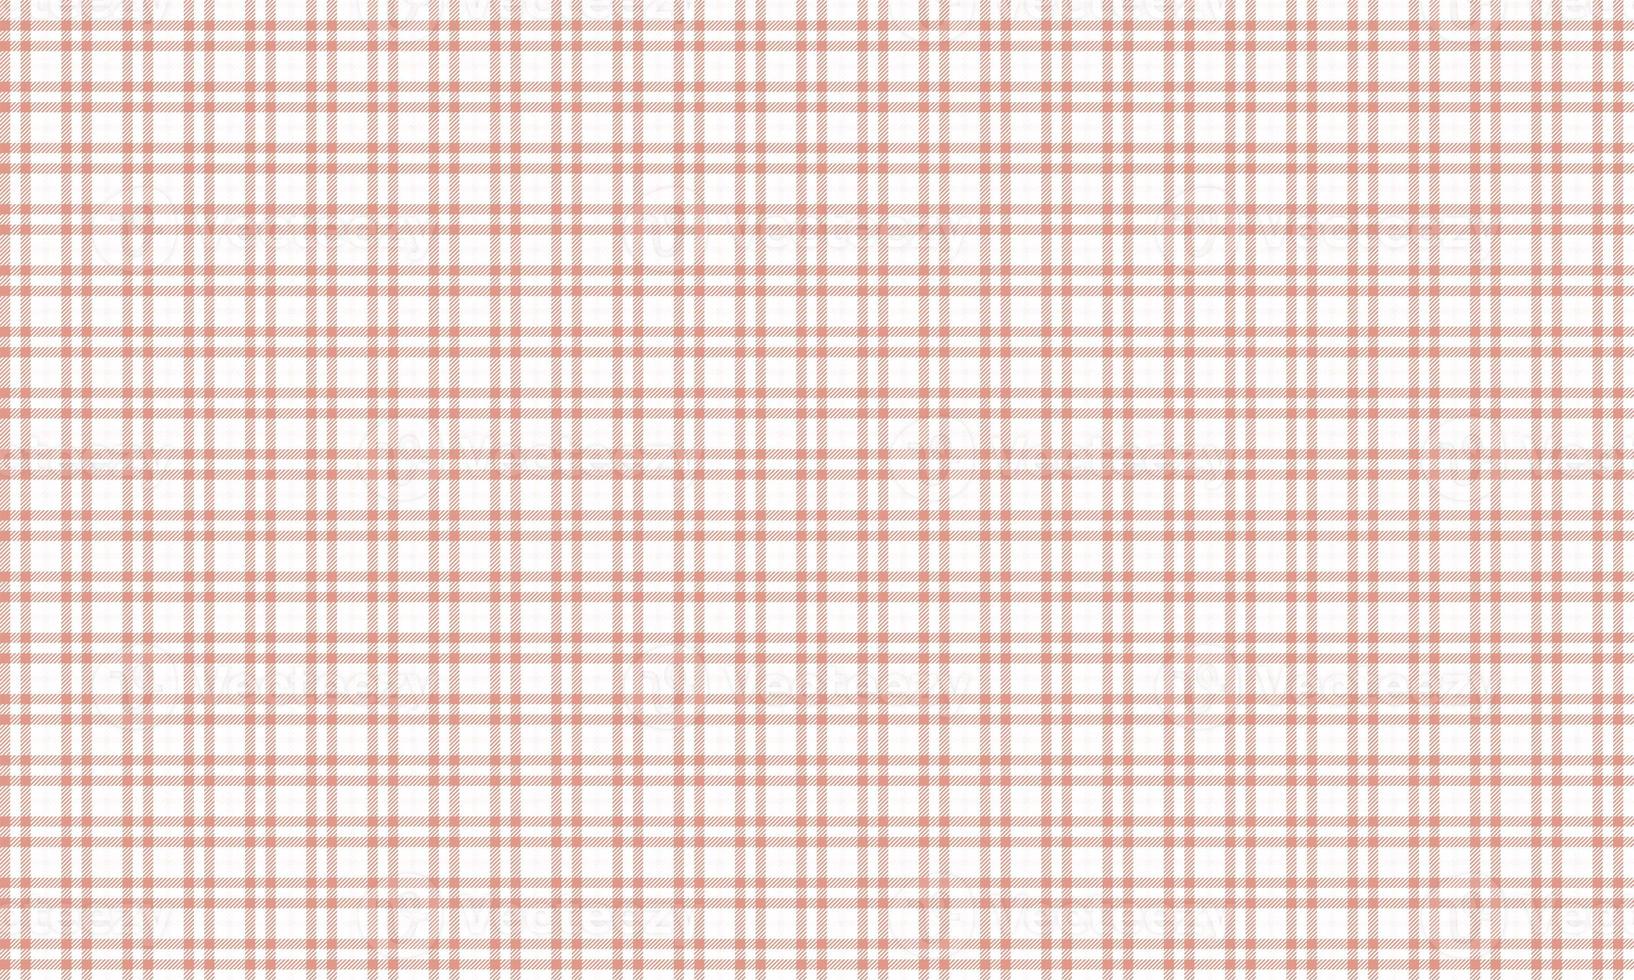 Red seamless plaid pattern photo